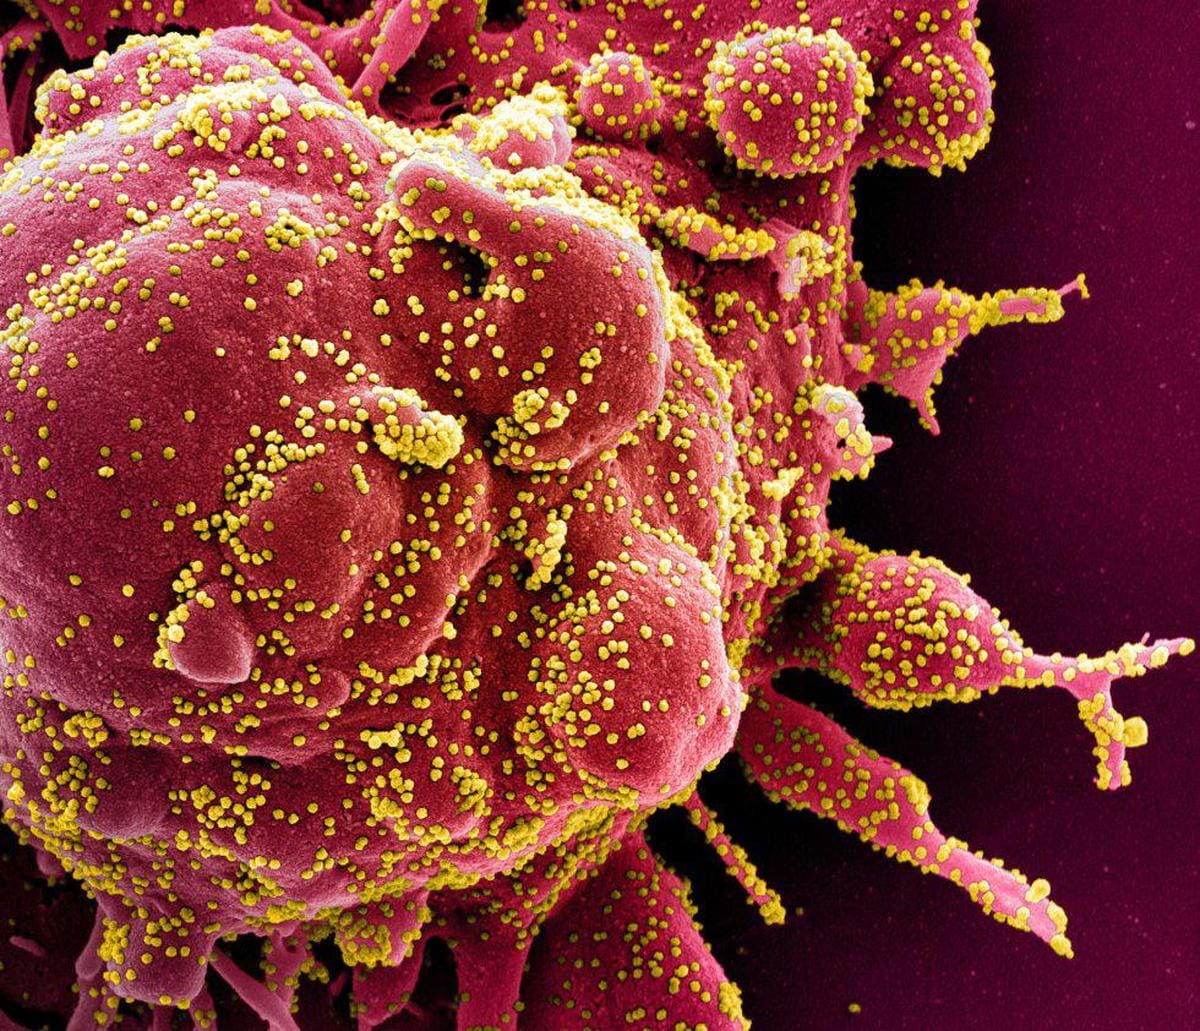 Imagen real del coronavirus a vista de microscopio.